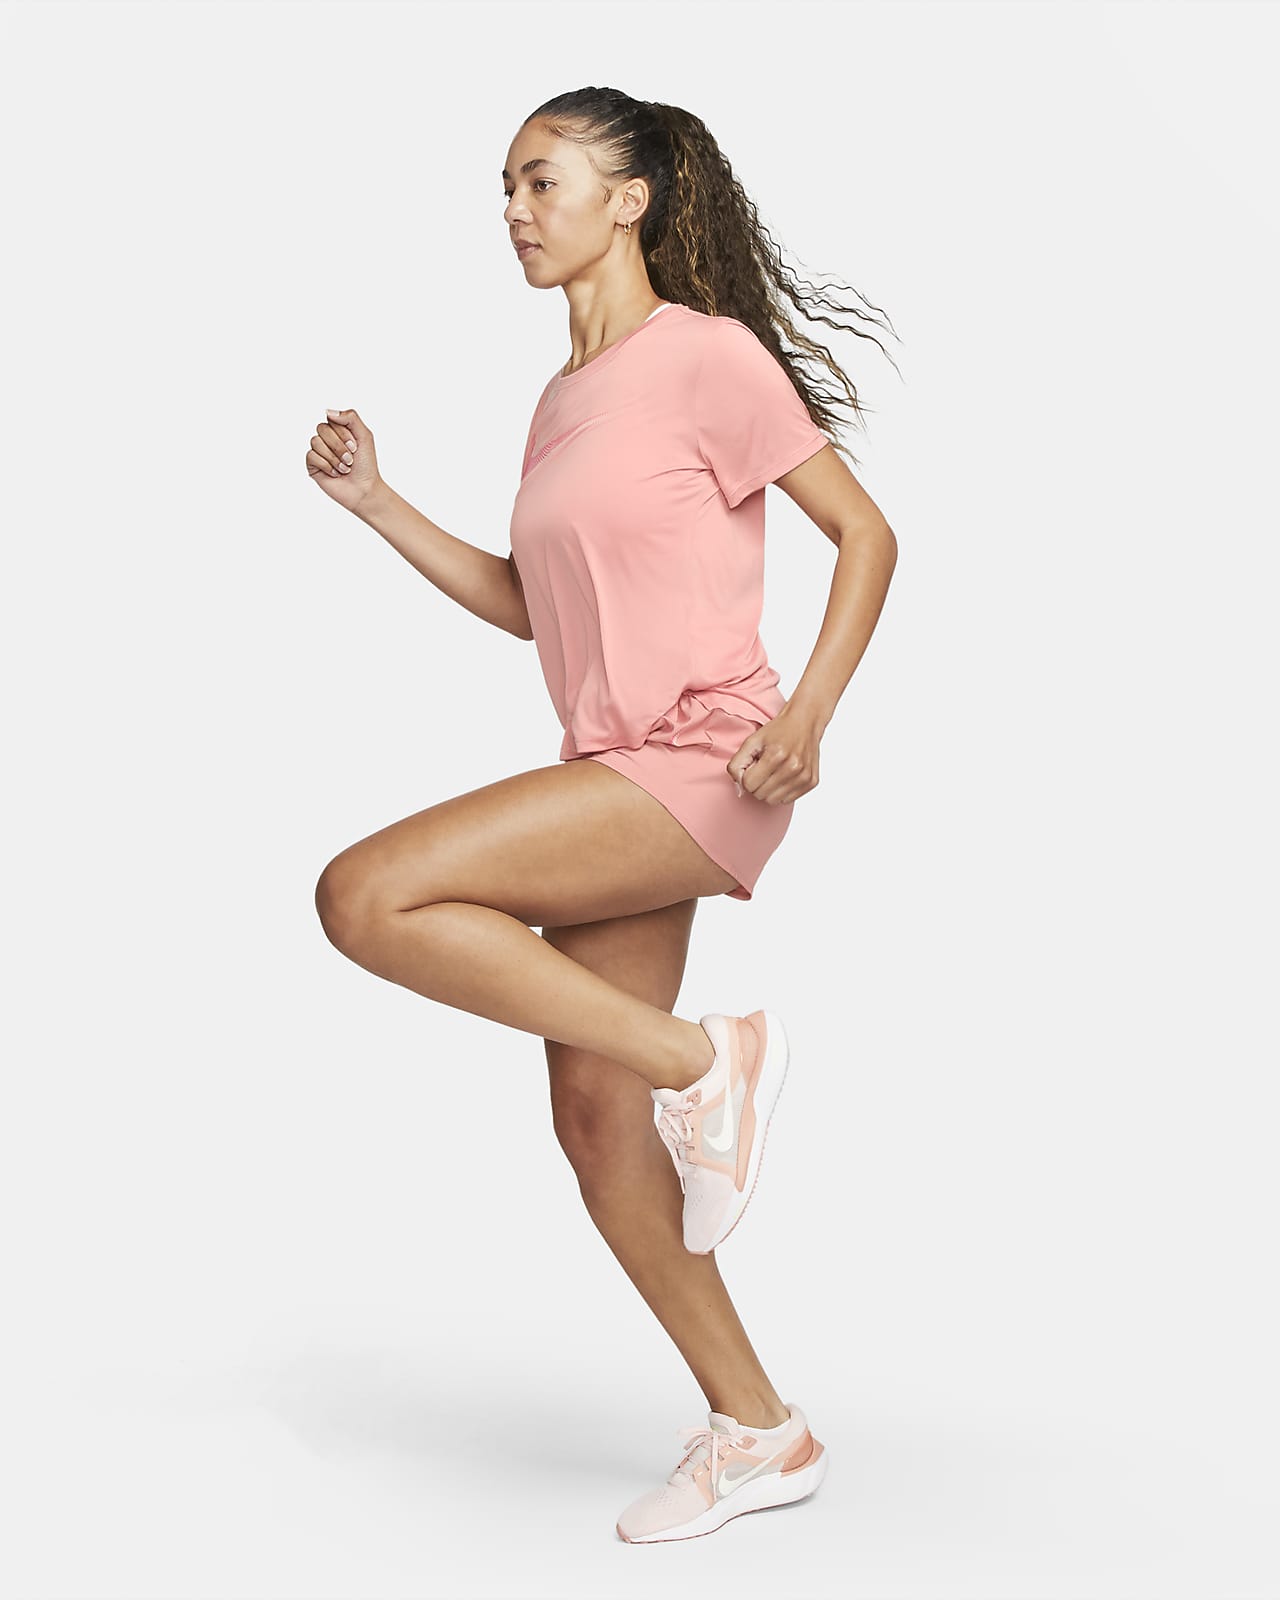 Women's Running Shorts. Nike AU